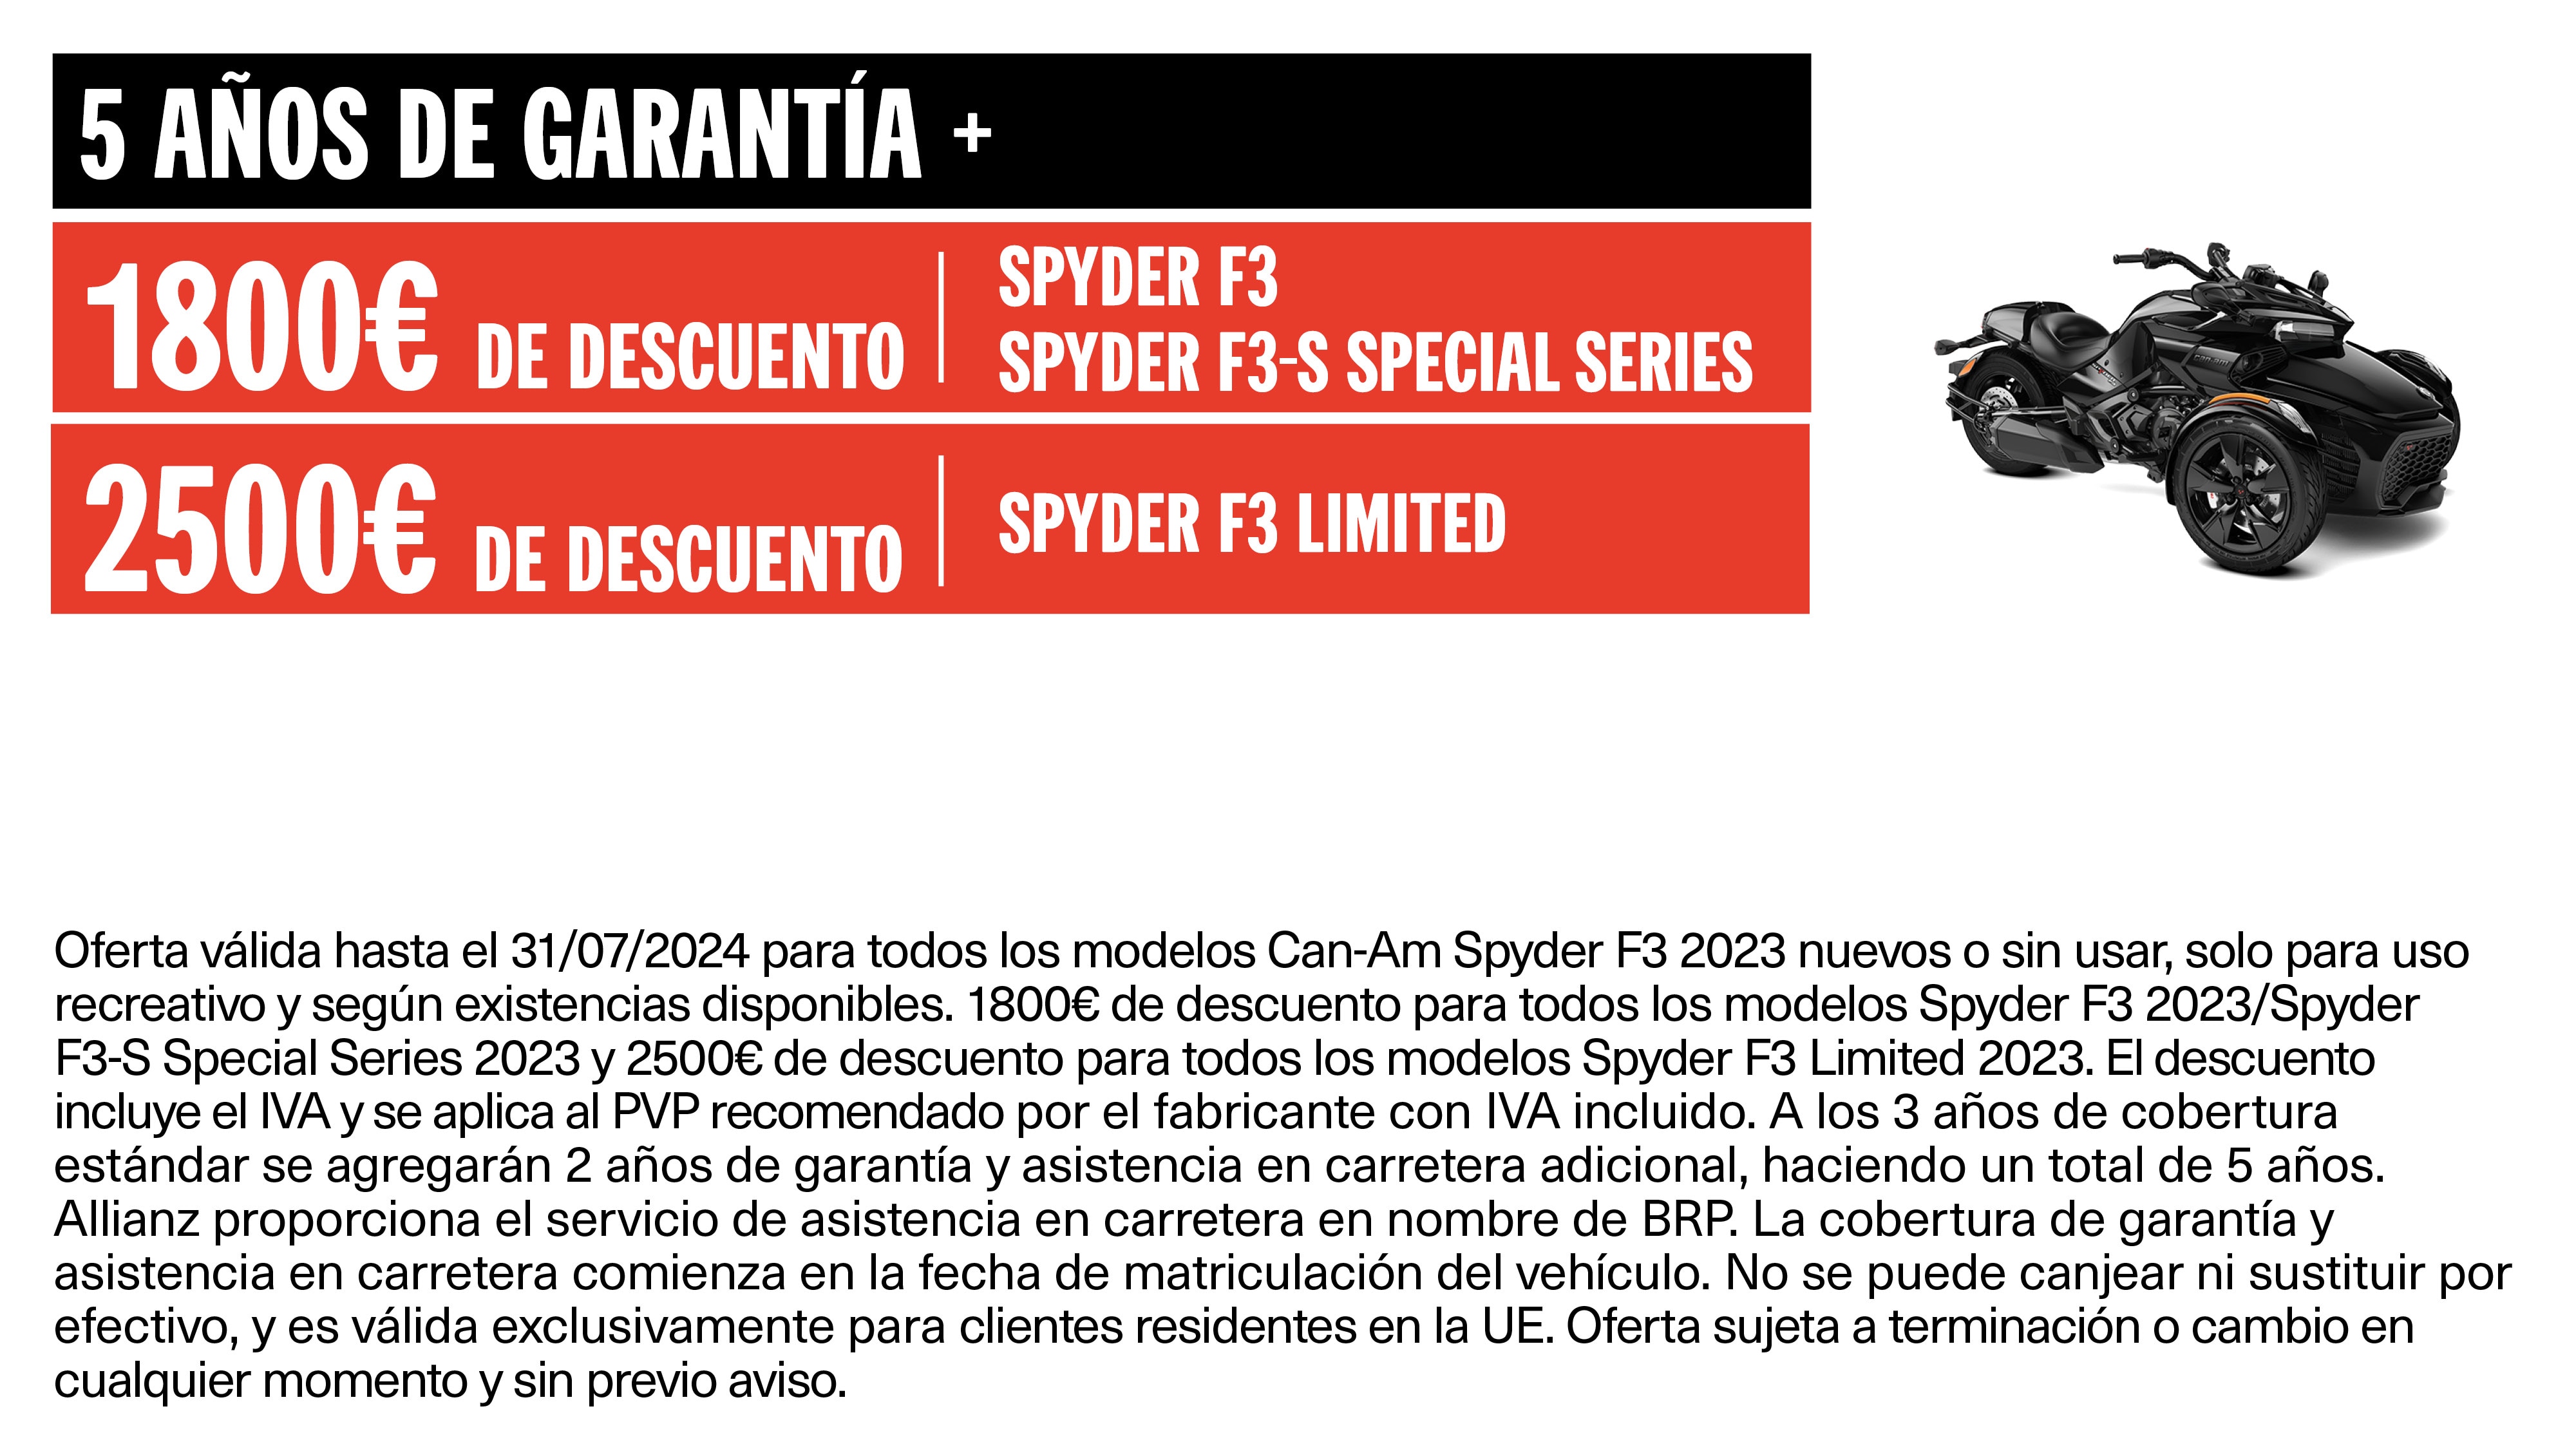 Can-Am Spyder F3 2023